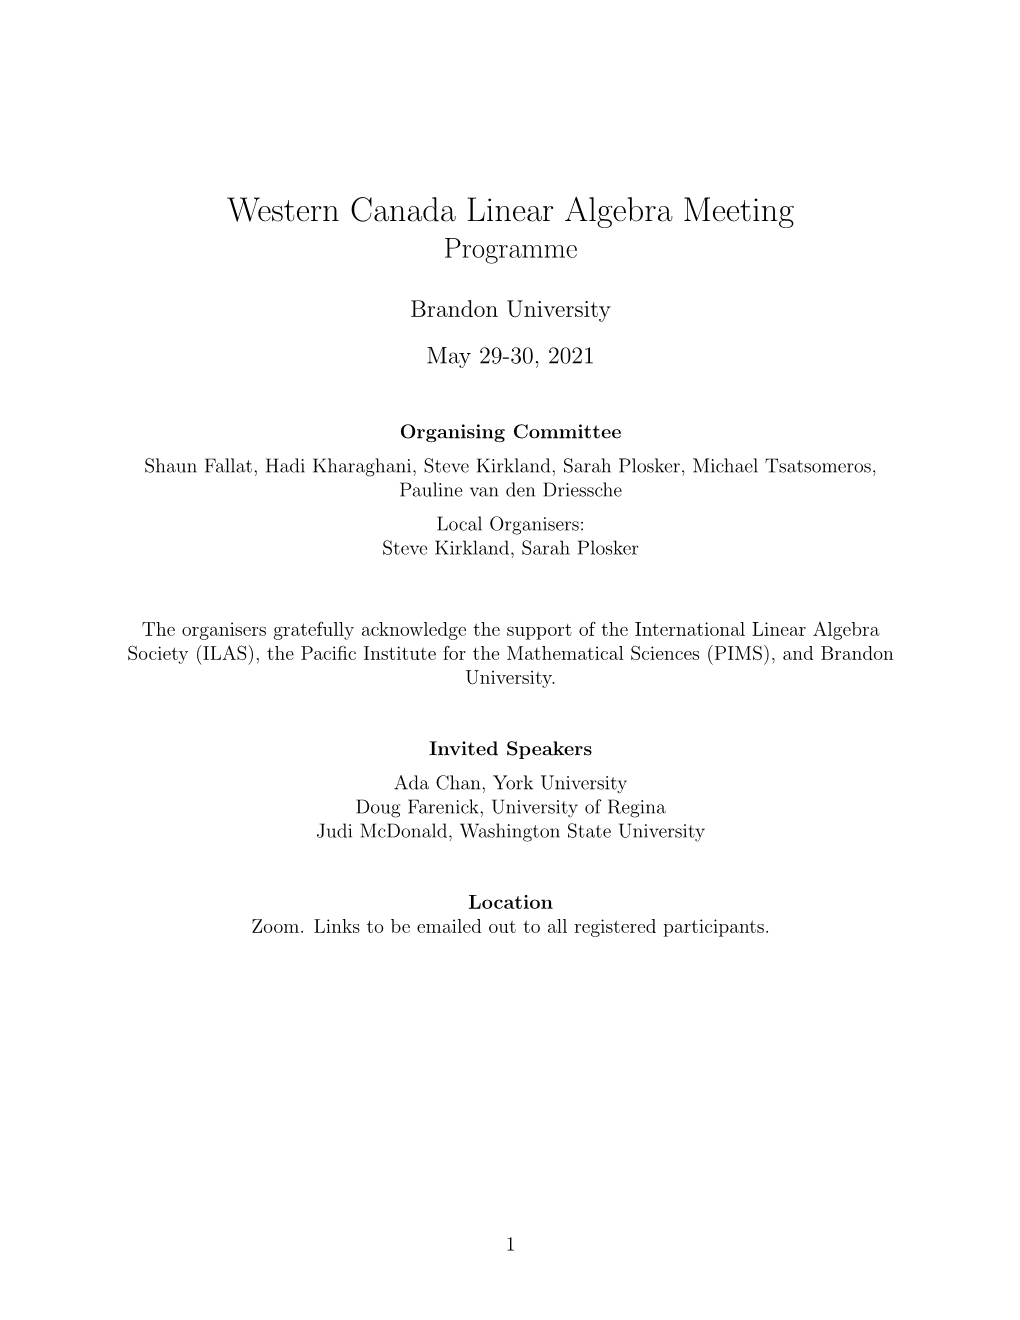 Western Canada Linear Algebra Meeting Programme